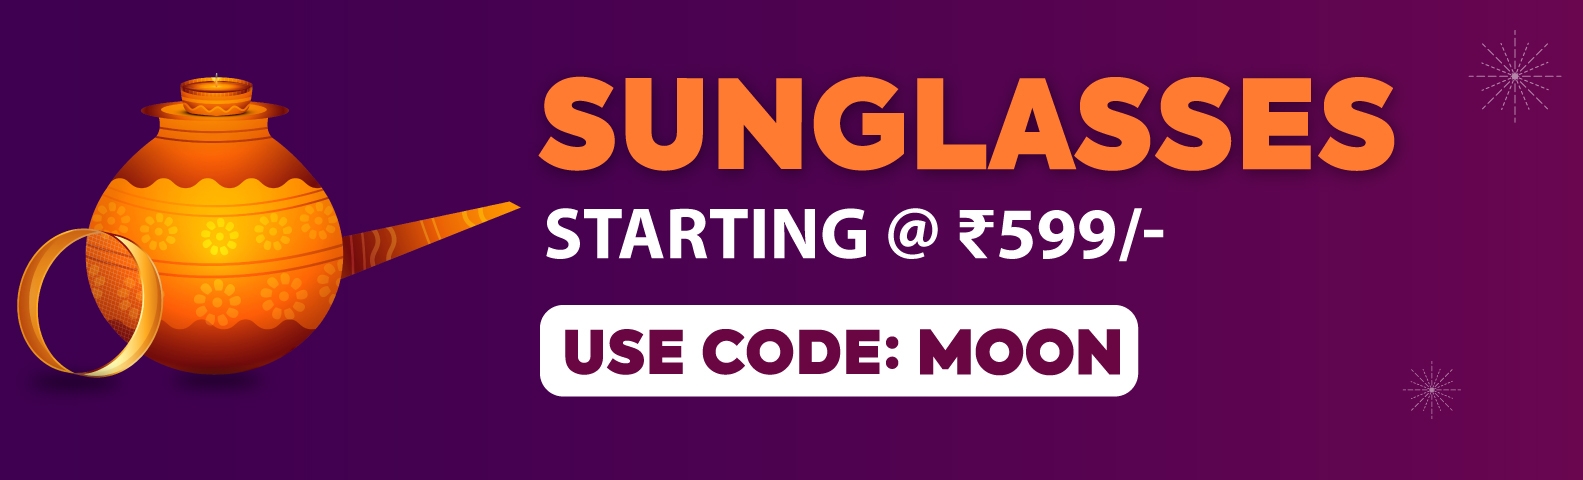 Sunglasses Starting @ ₹599 | Use Code: Moon